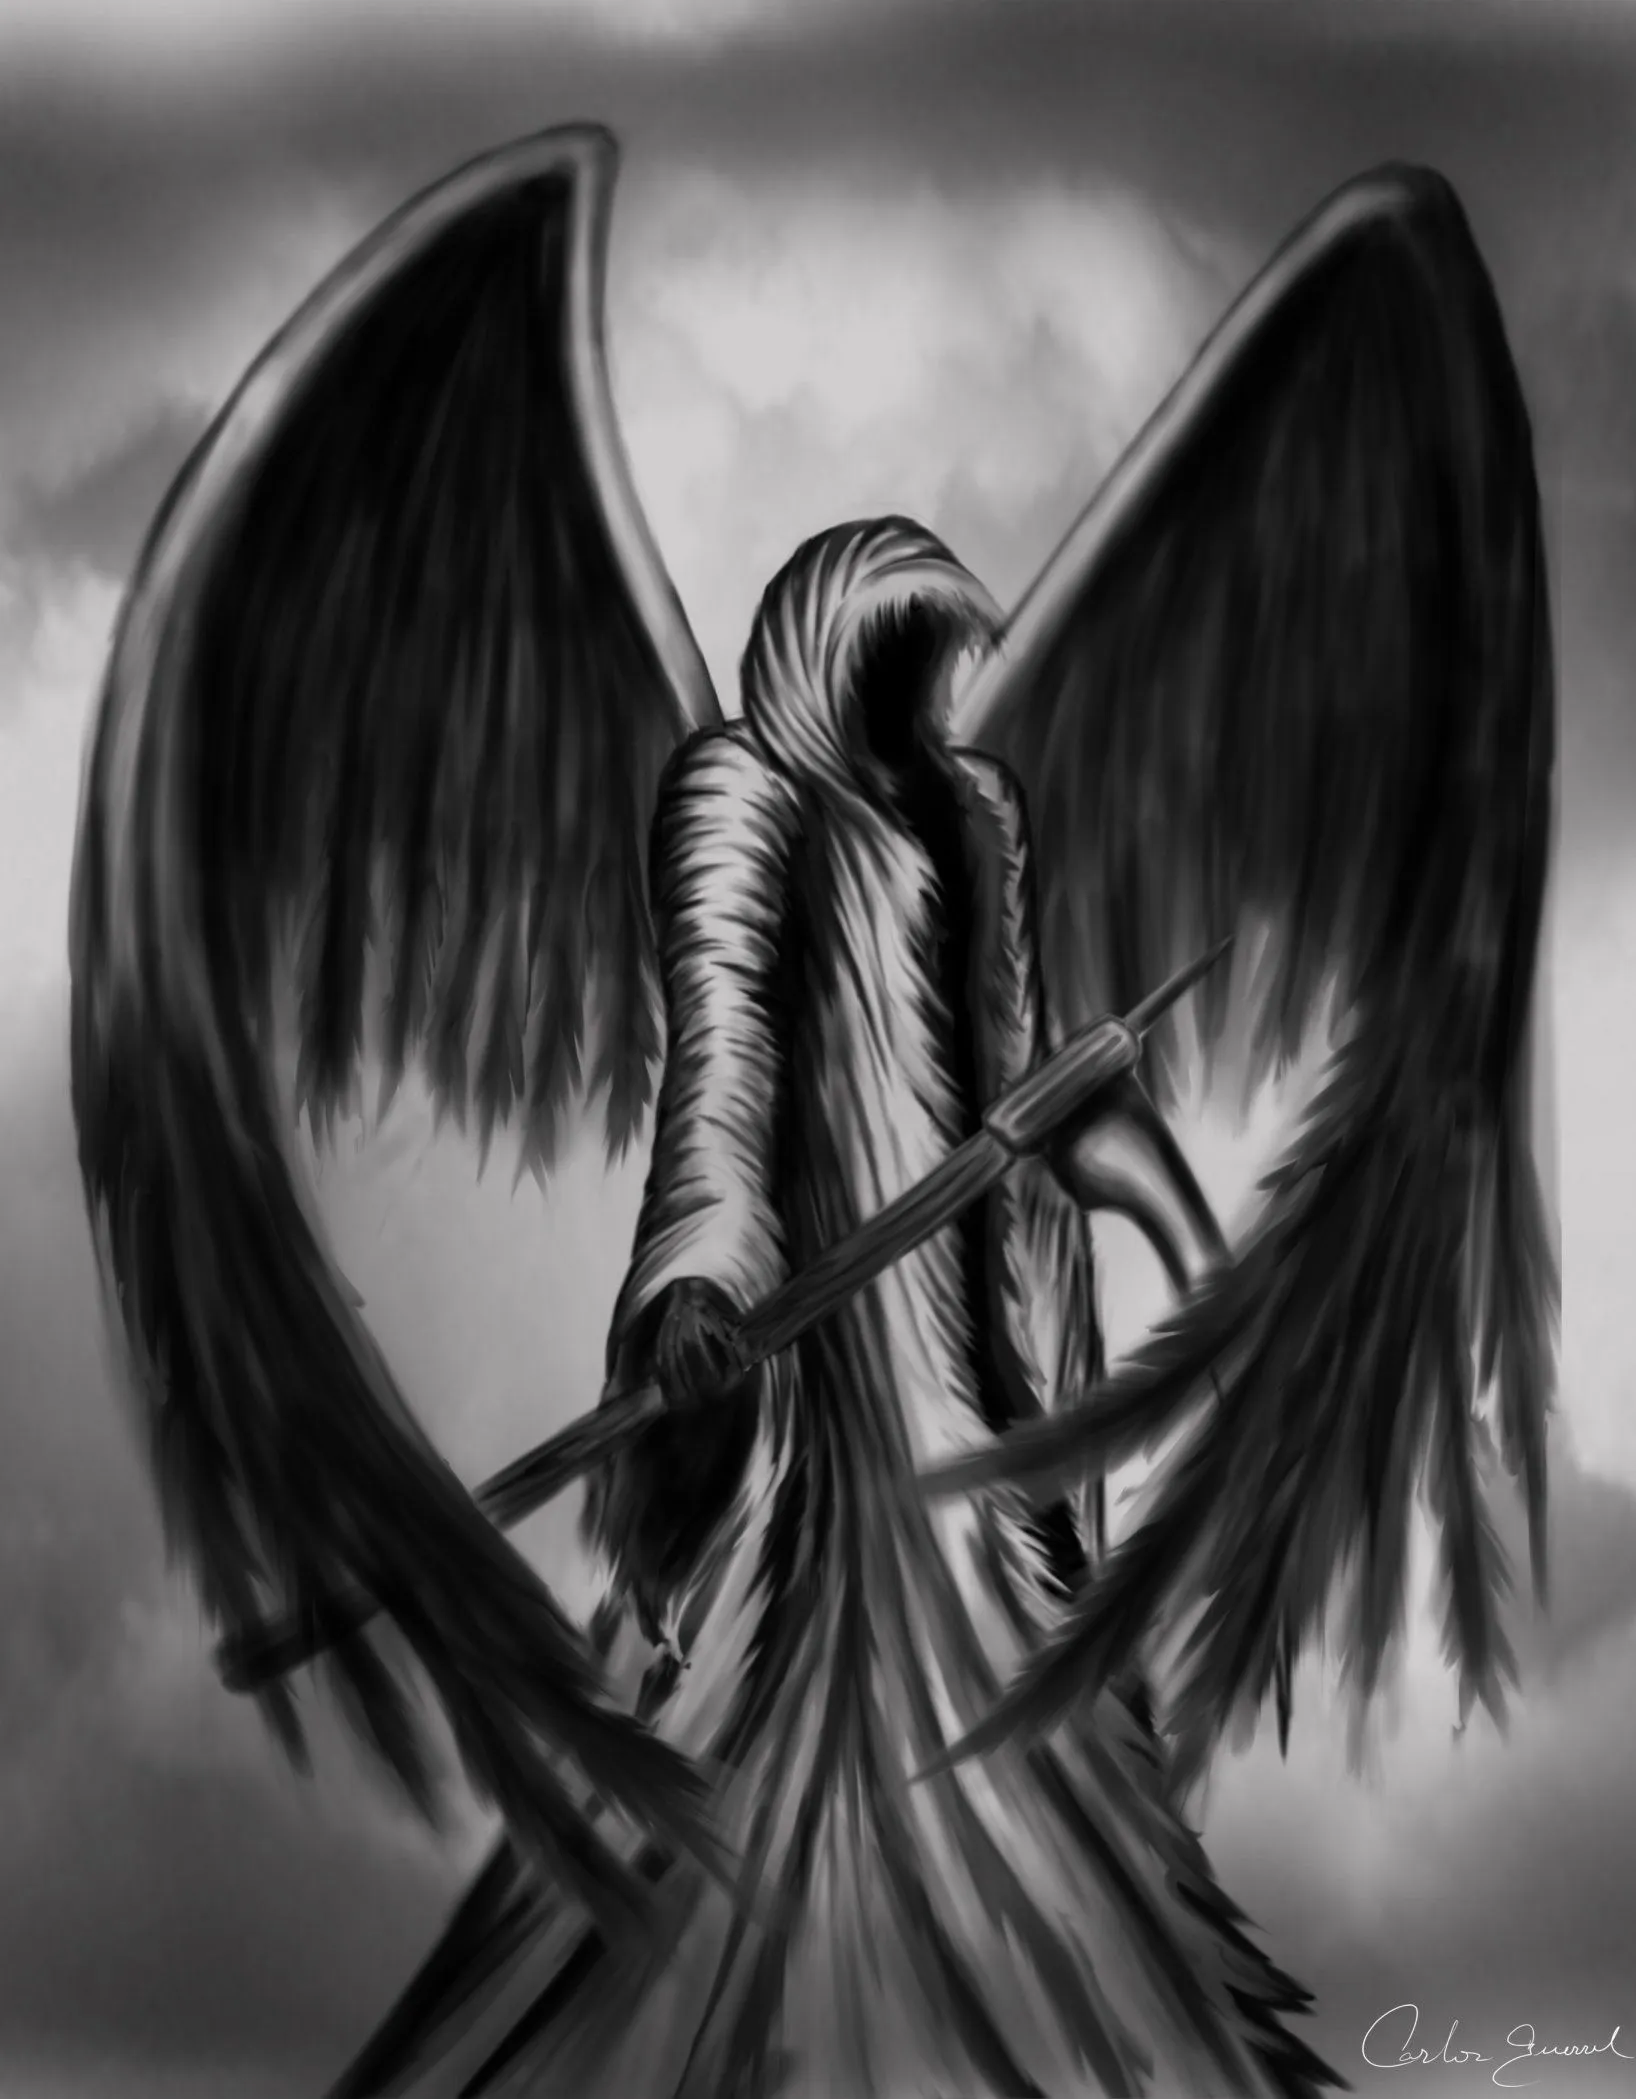 Imagenes del angel de la muerte - Imagui